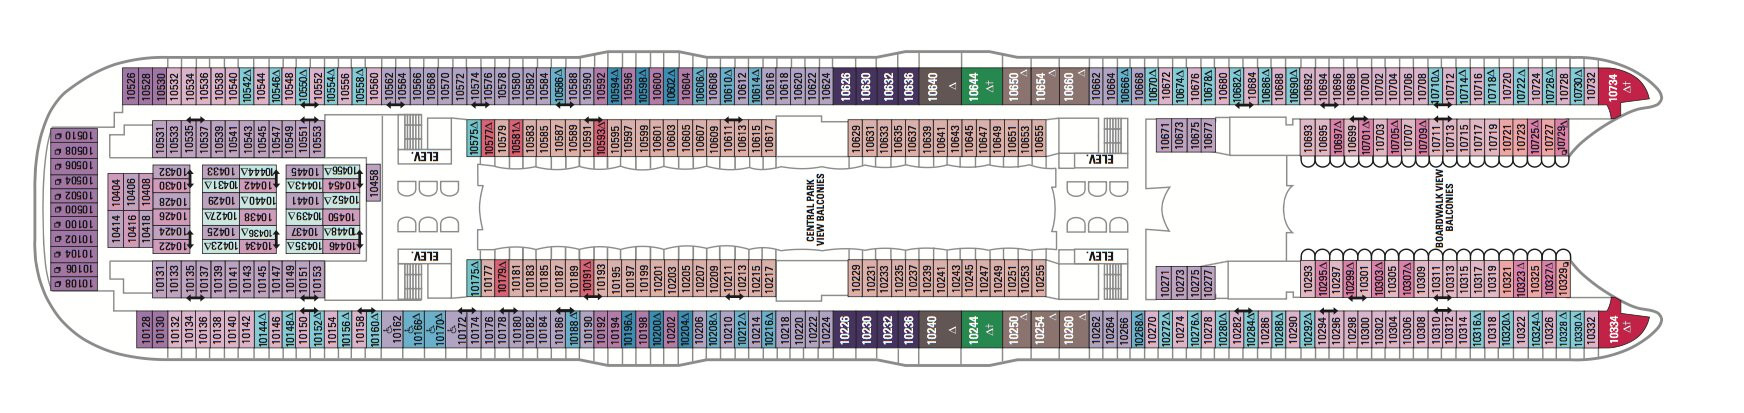 1689884780.461_d484_Royal Caribbean International Symphony of the Seas Deck Plans Deck 10.png